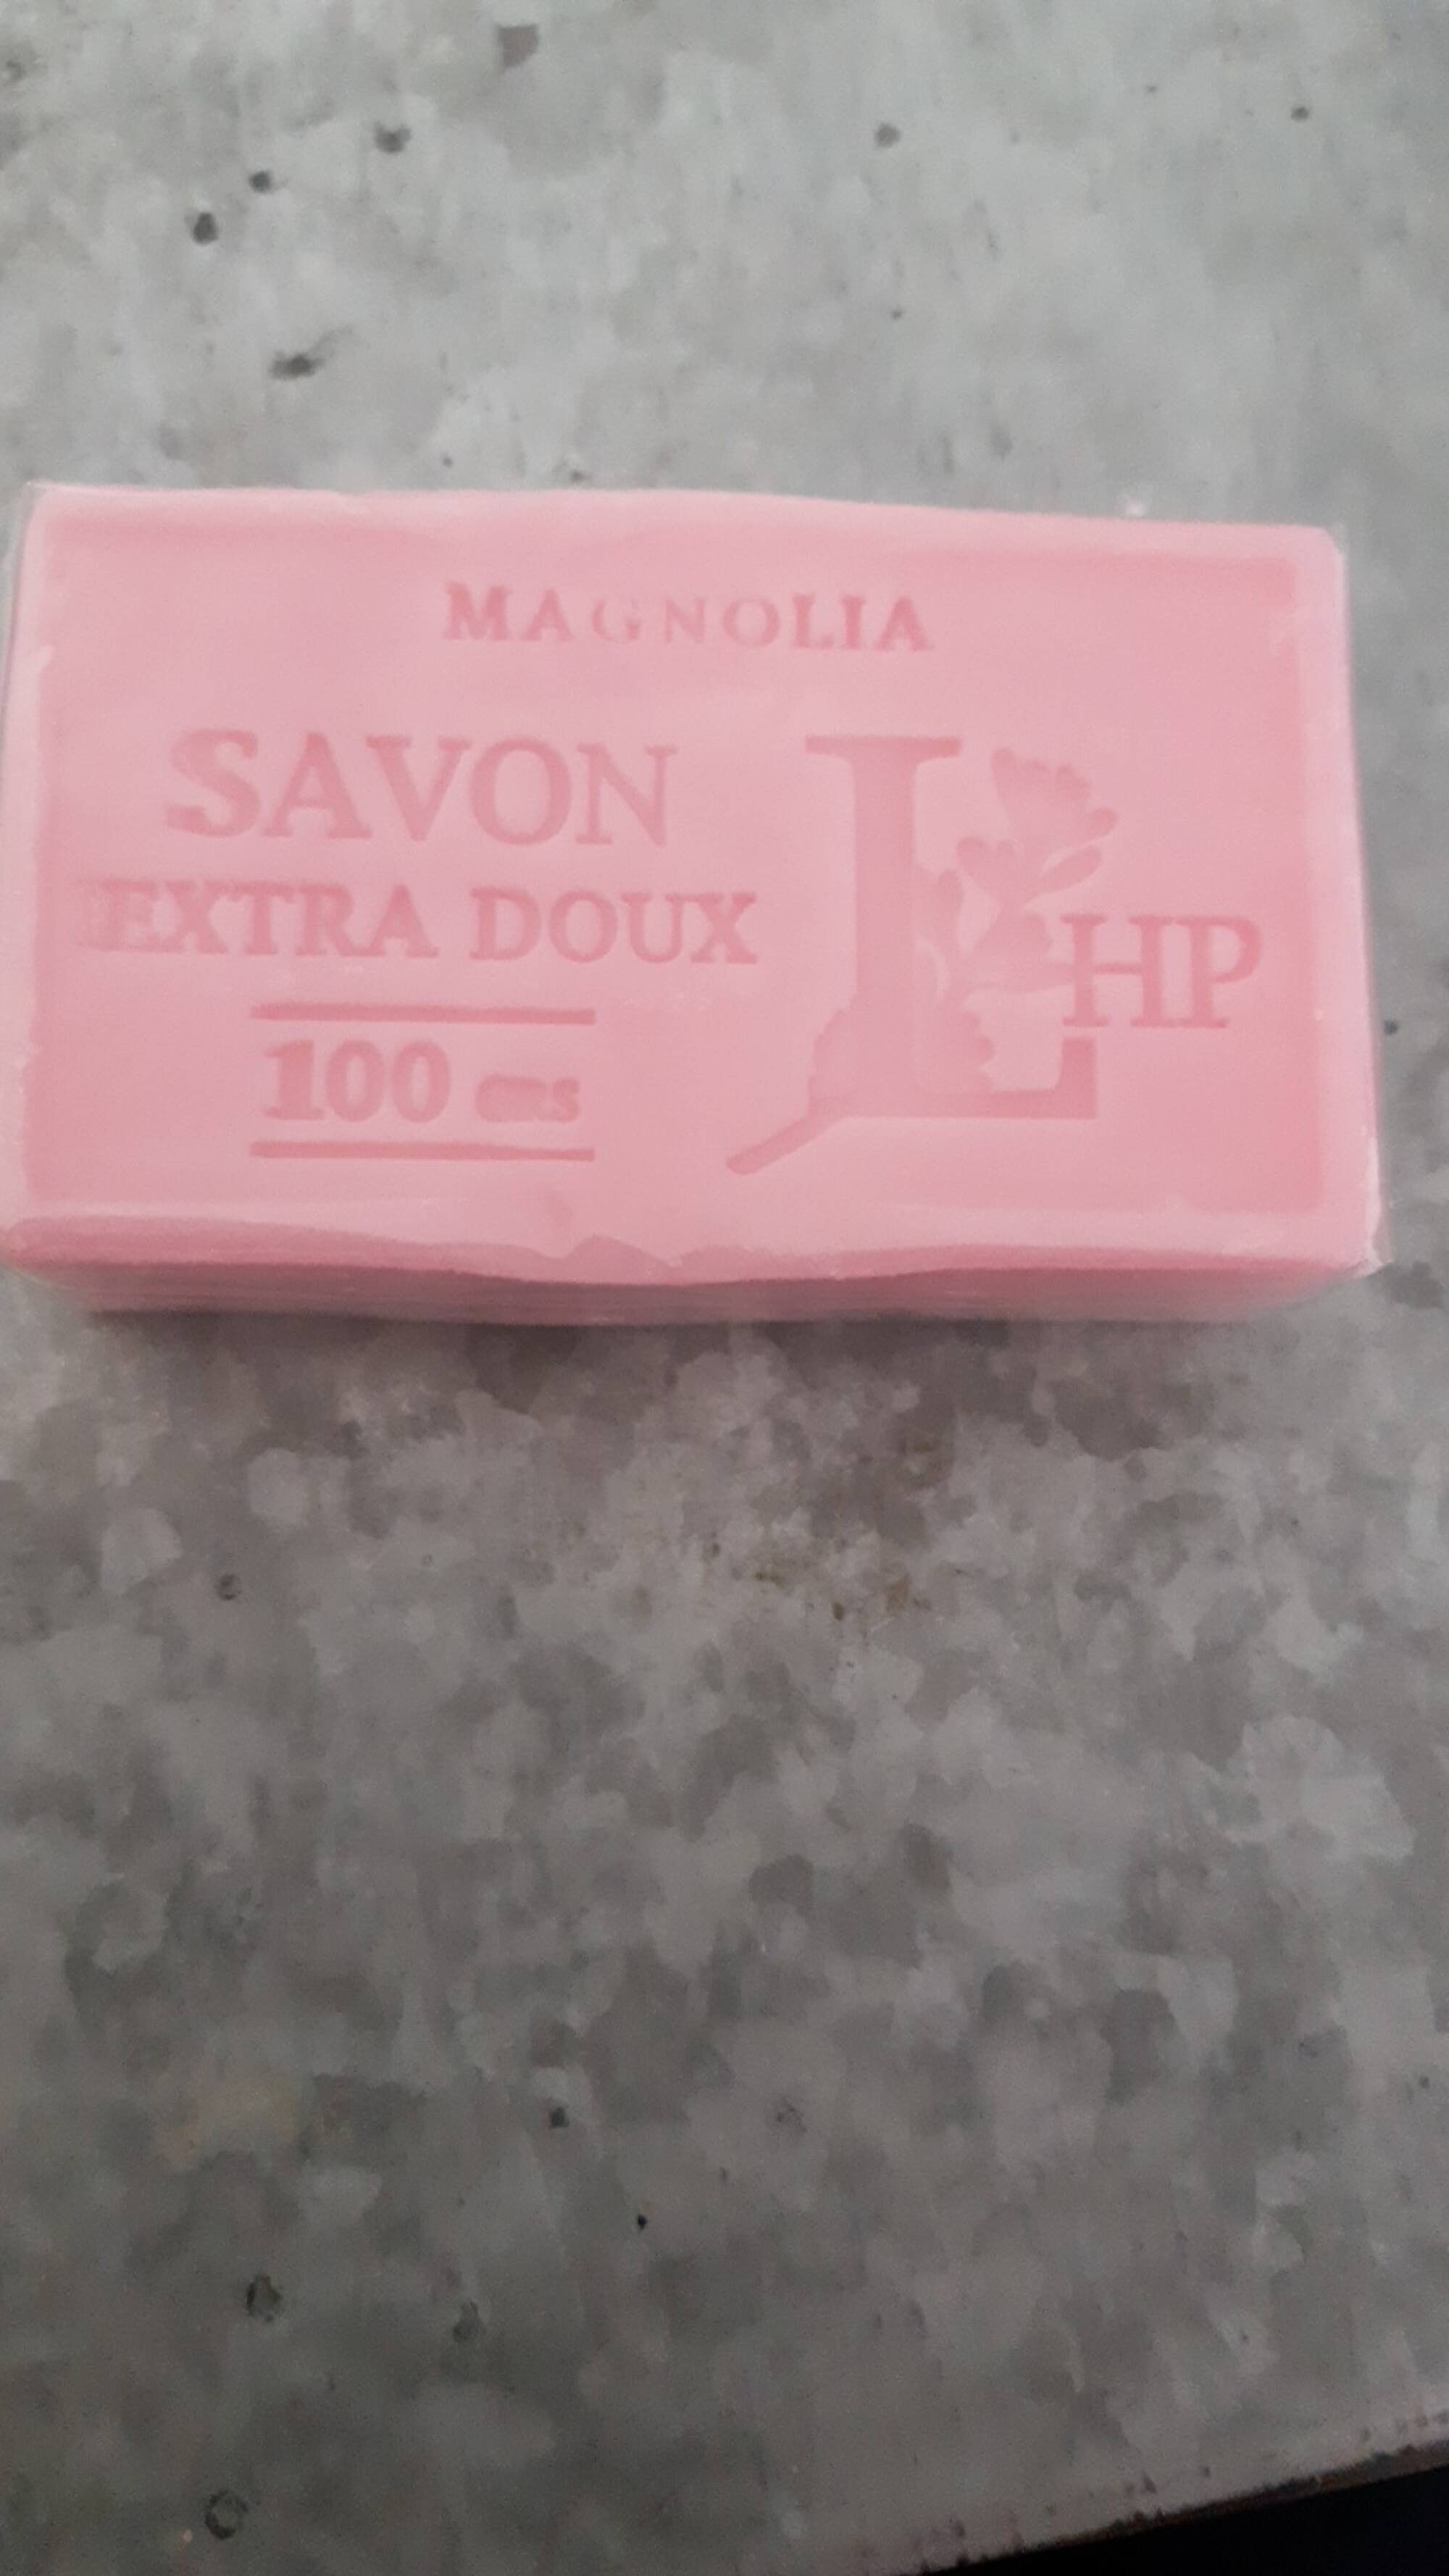 LHP PROVENCE - Magnolia - Savon extra doux